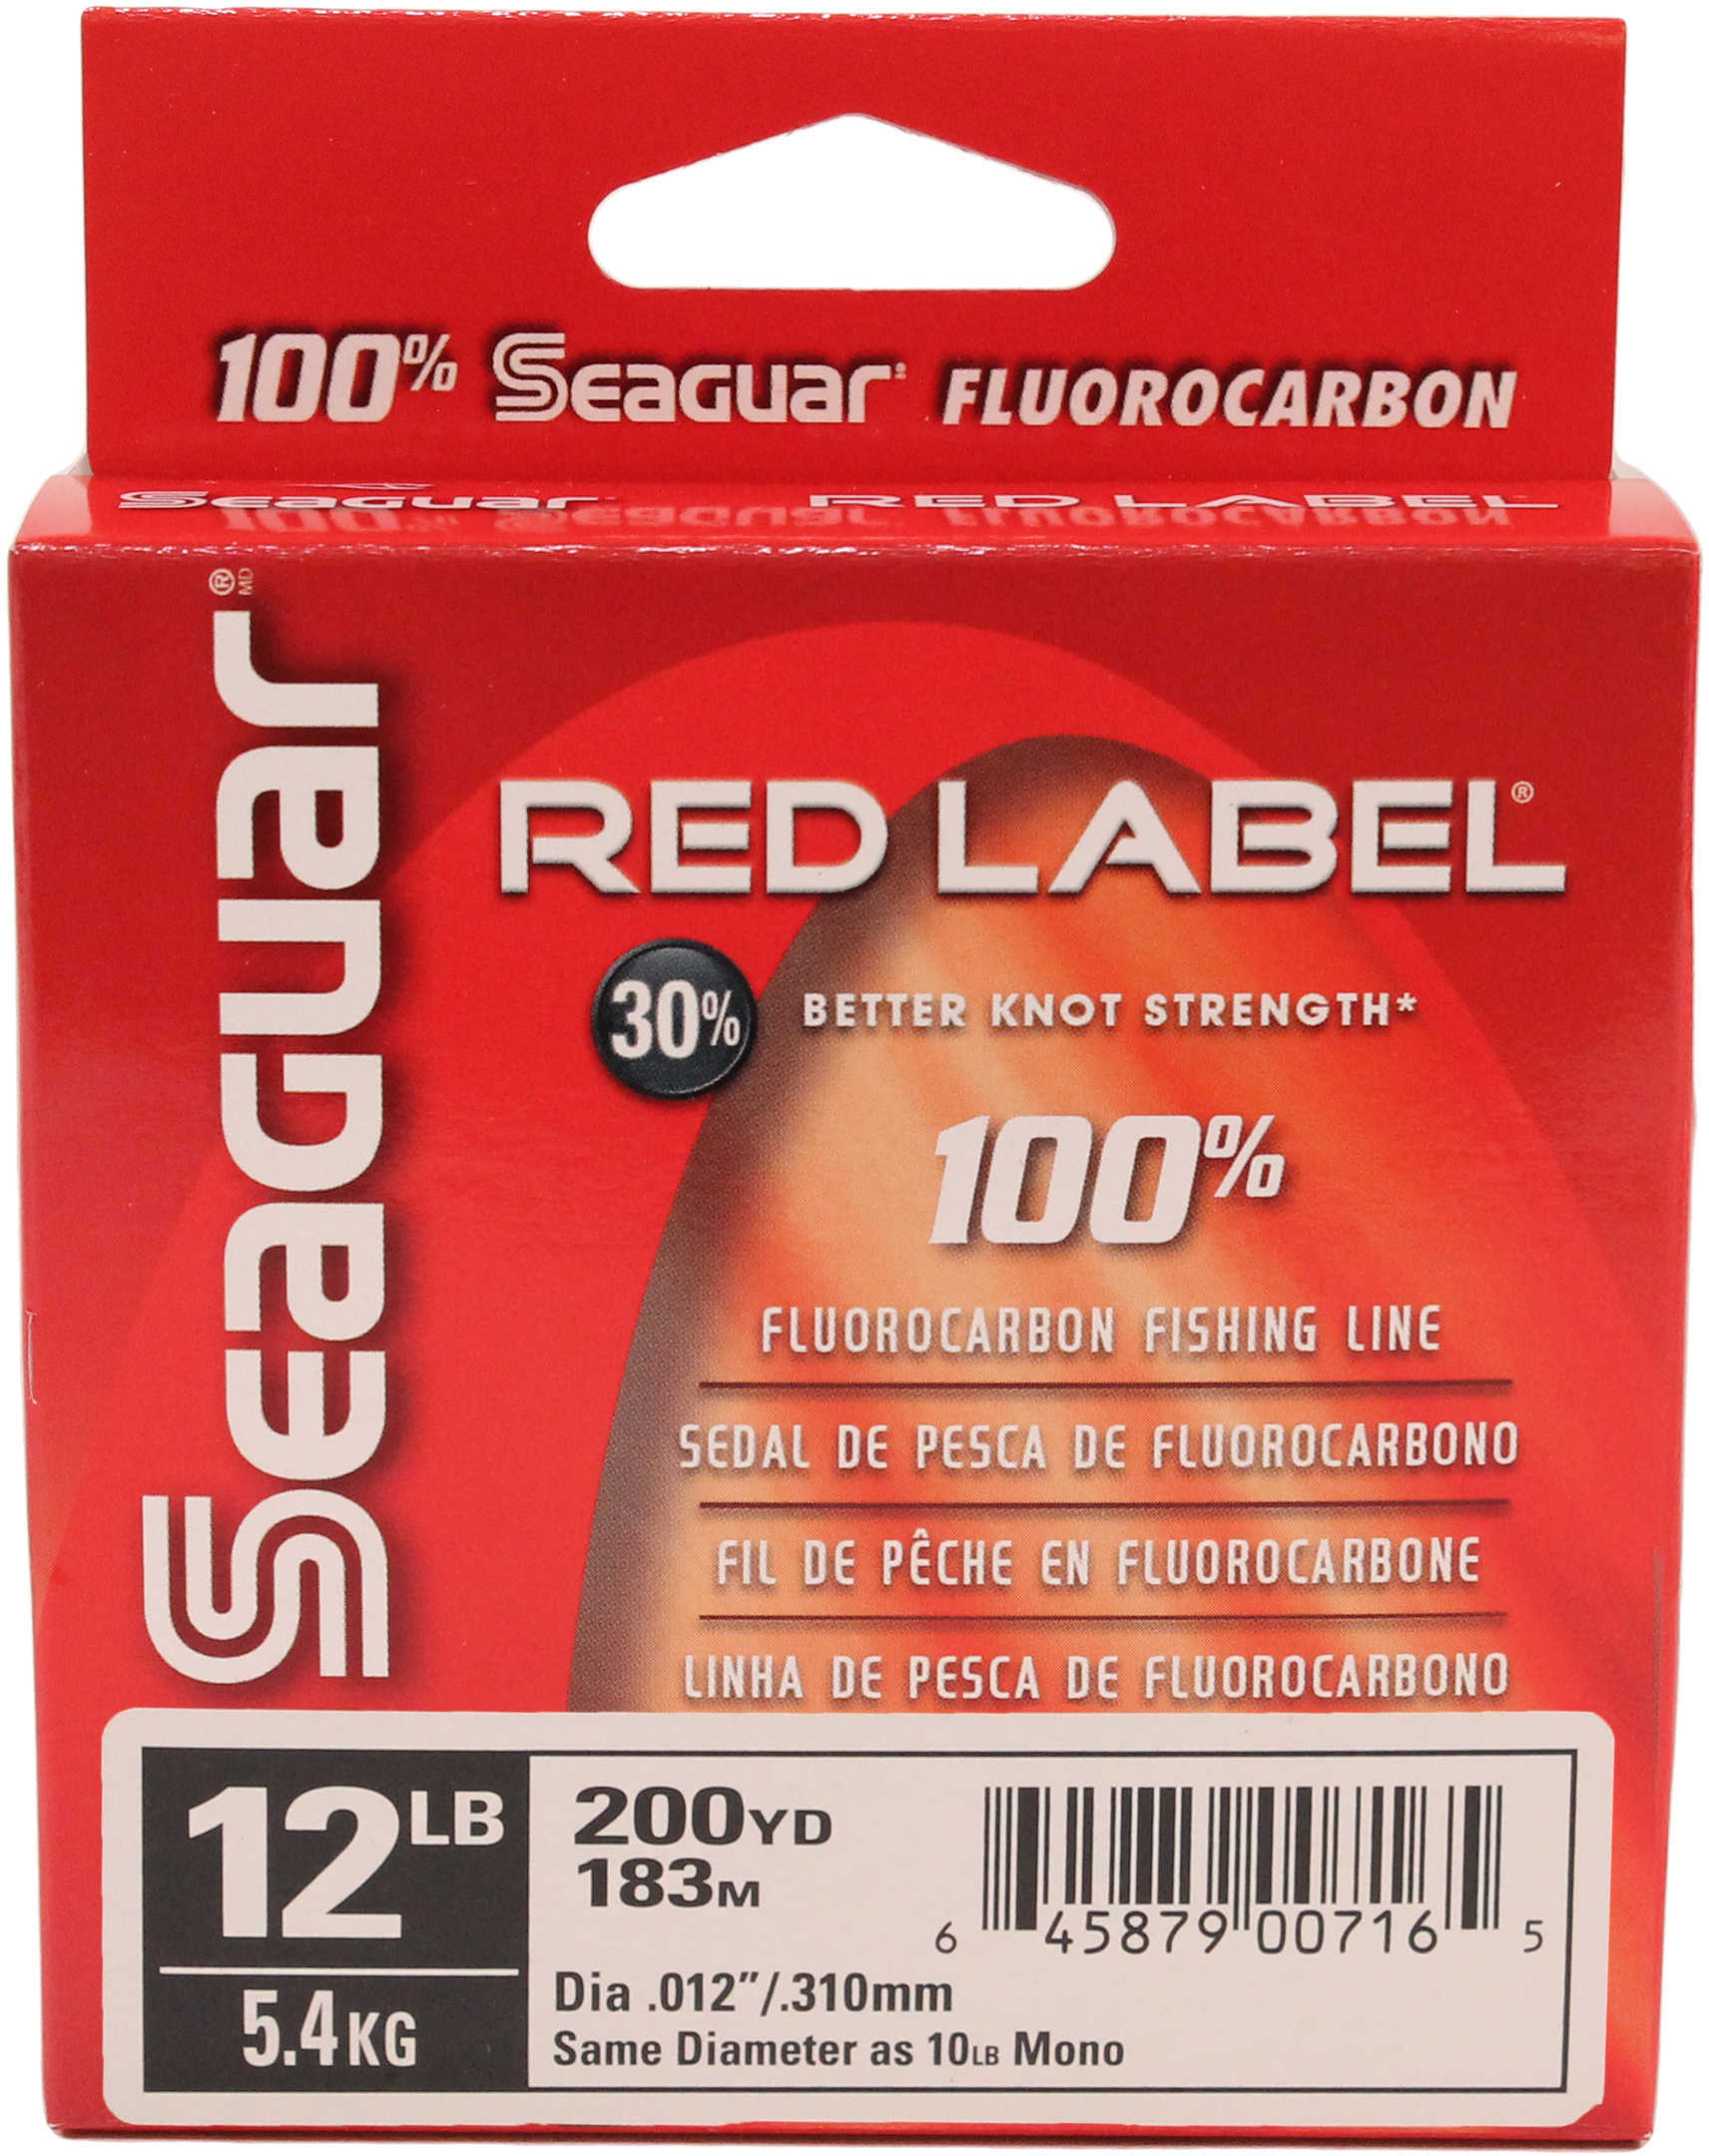 Seaguar / Kureha America Red Label Fluorcarbon Clear 200yds 12lb Md#: 12RM-200